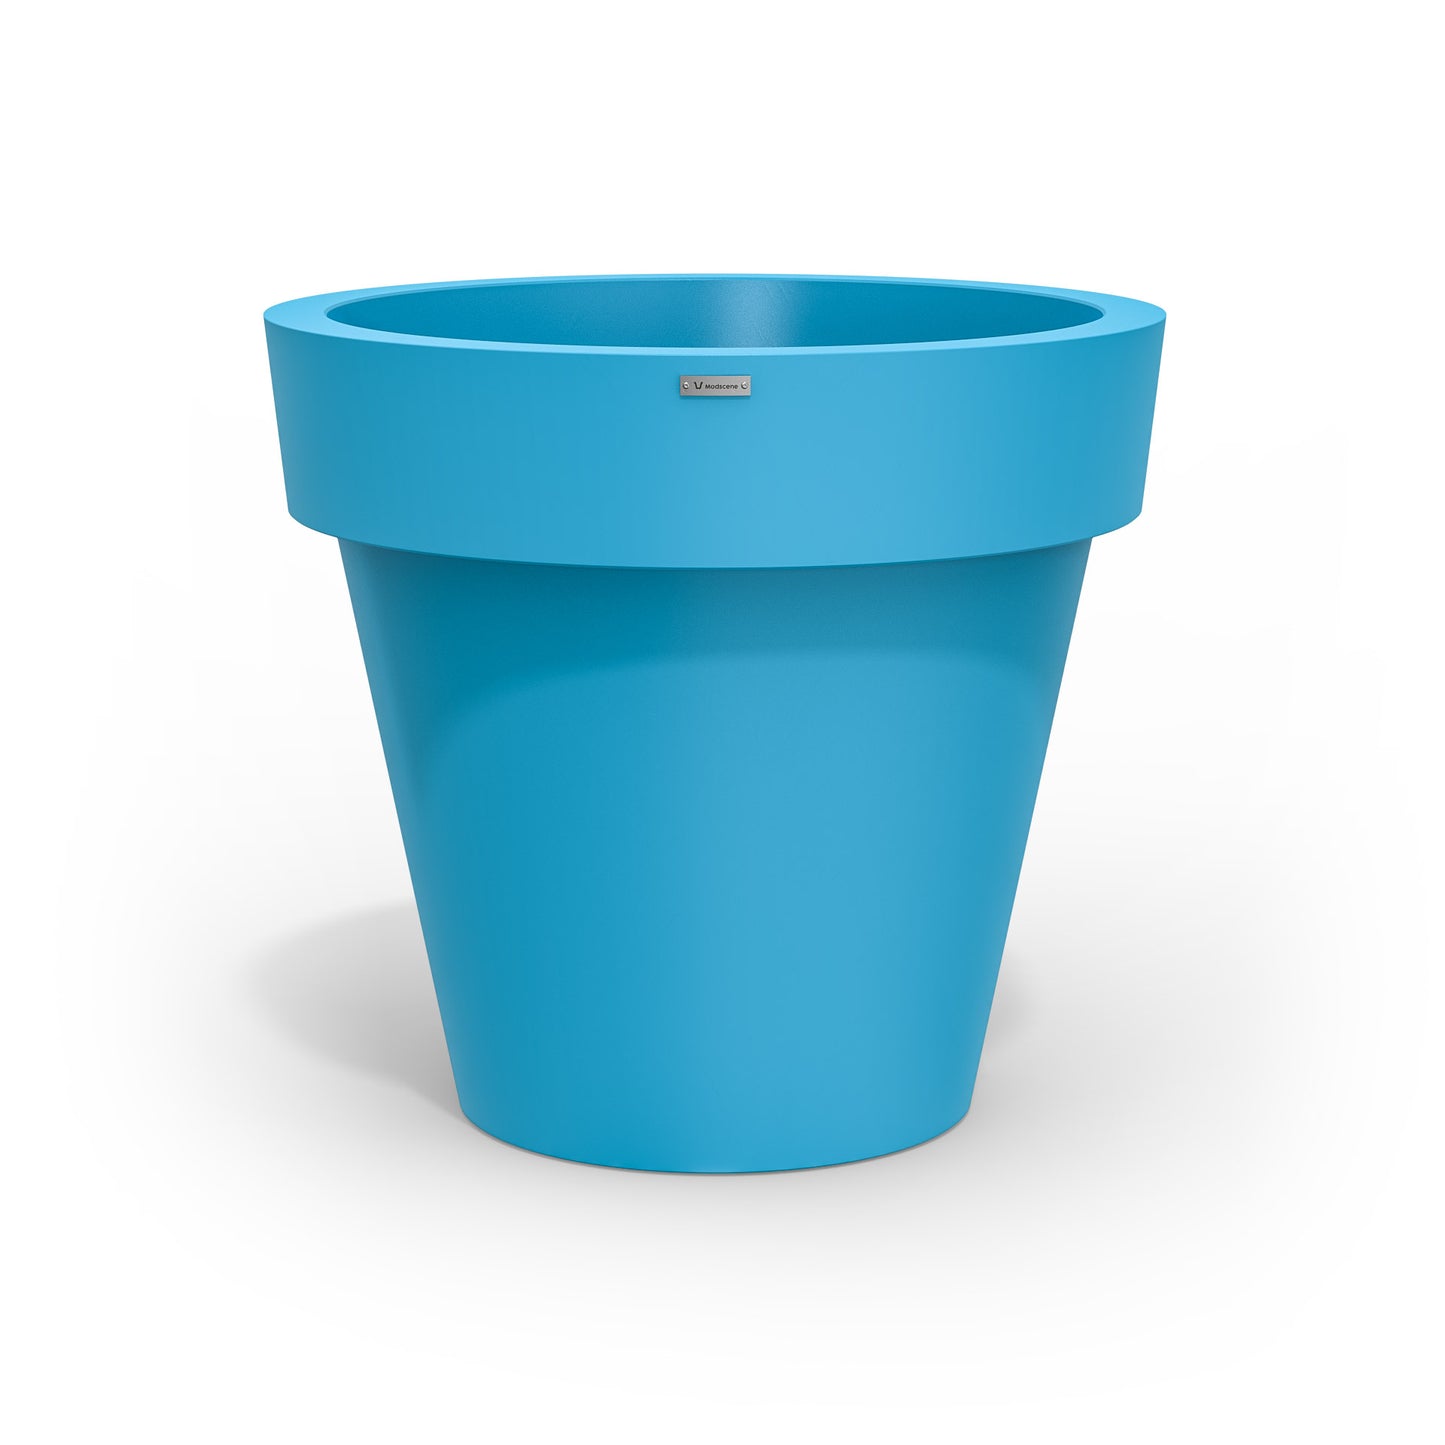 A large blue planter pot made by Modscene NZ.